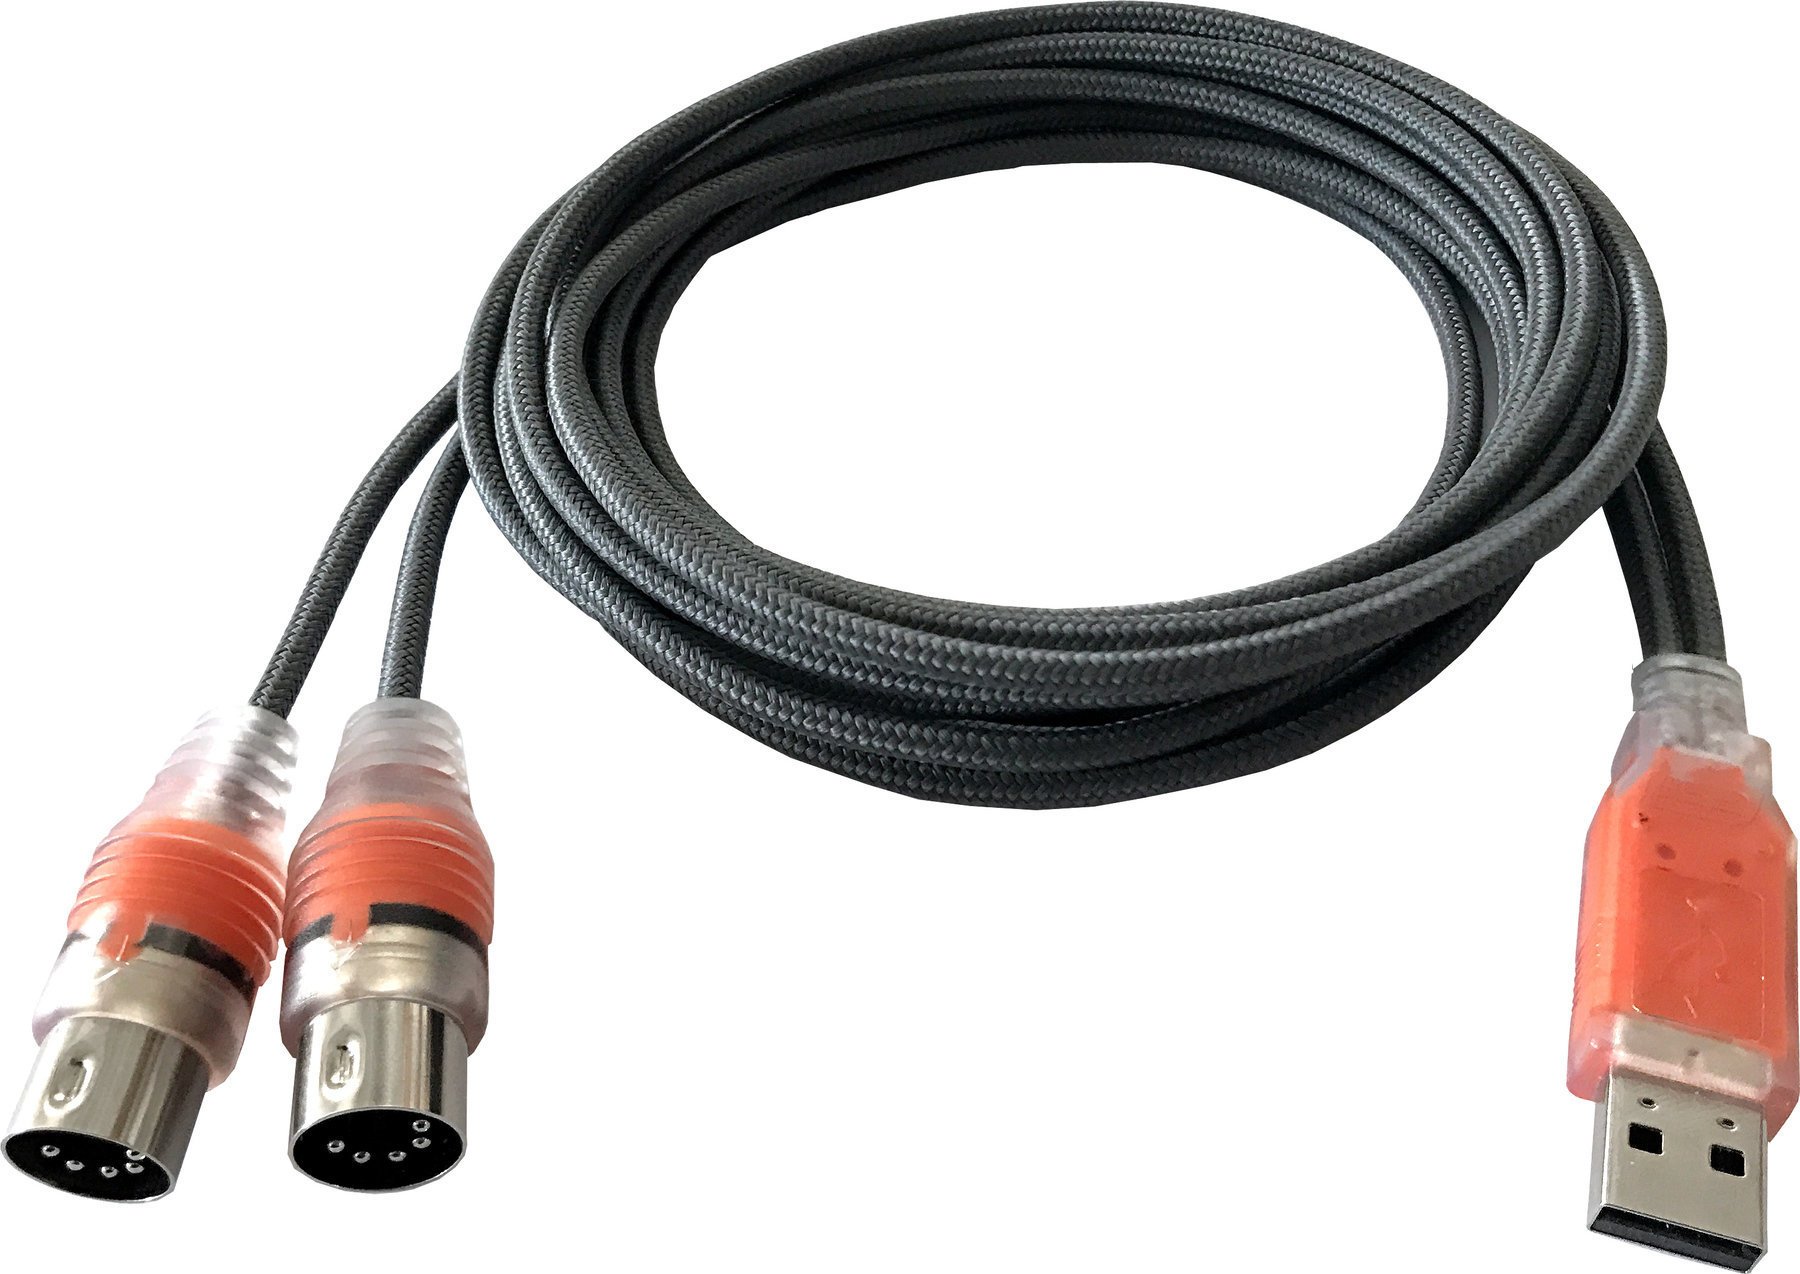 USB Cable ESI MIDIMATE eX Black 190 cm USB Cable